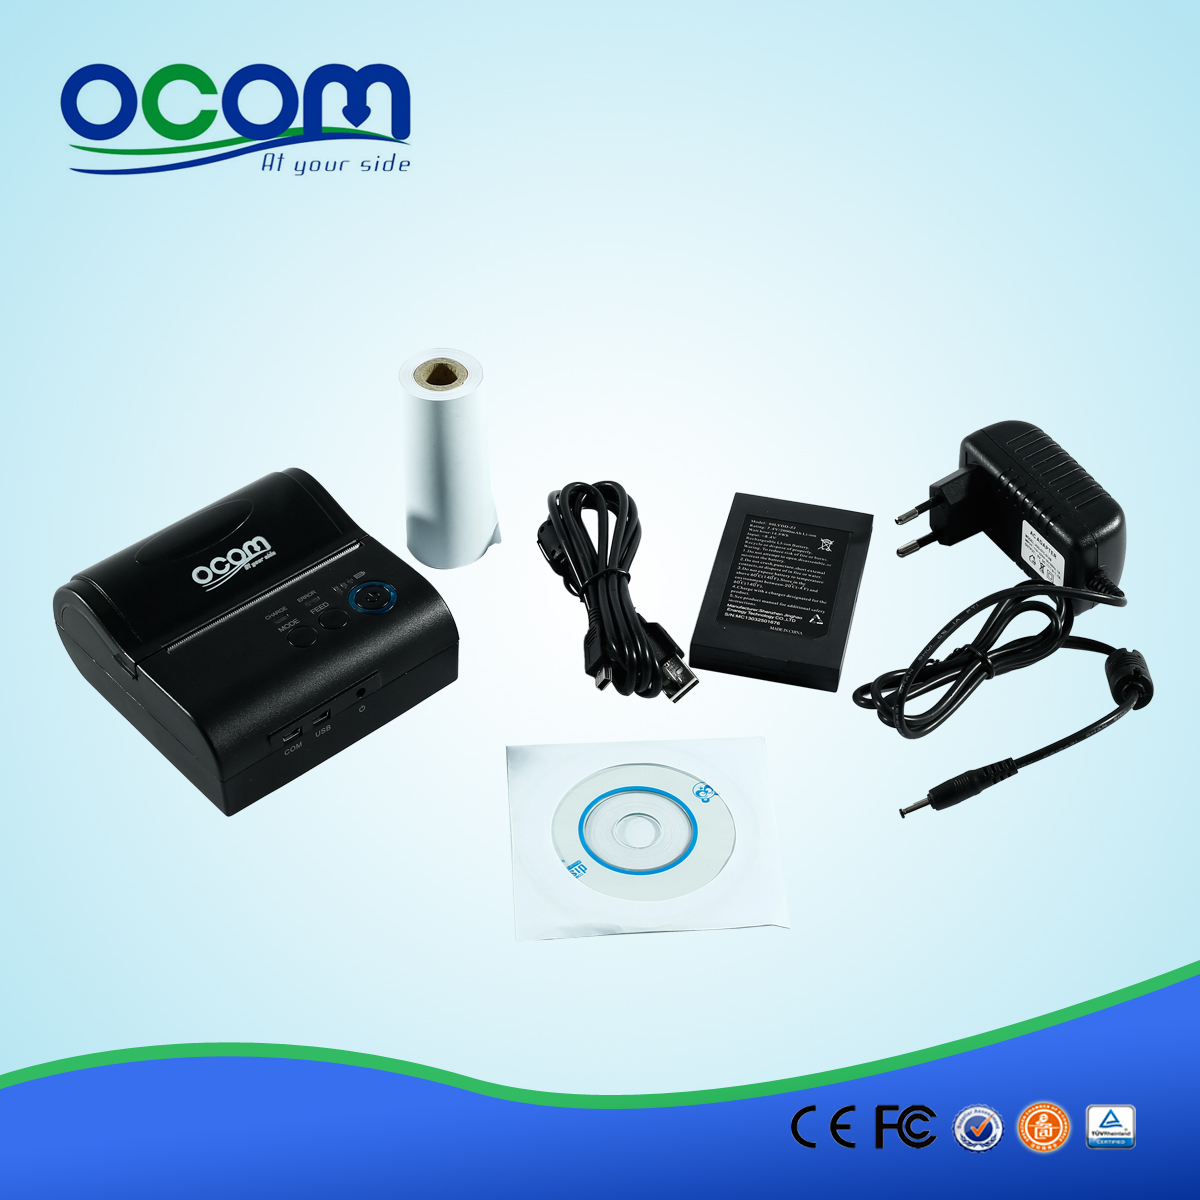 OCPP-M082: 80MM Bluetooth Impresora Soporte Android, Windows, Linux, Con SDK